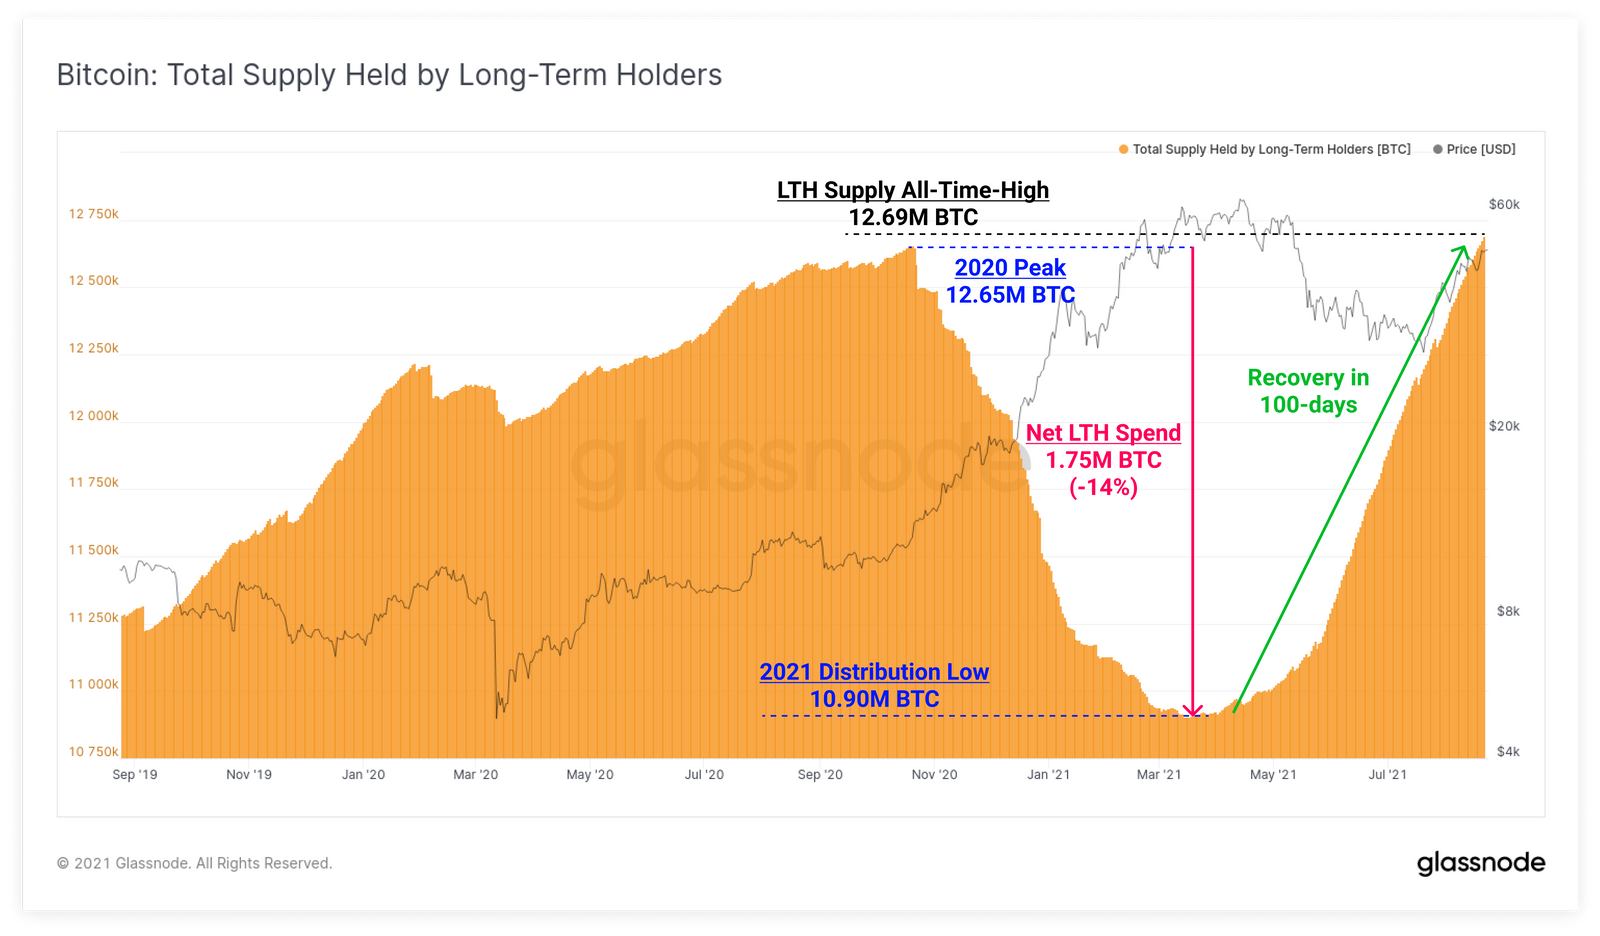 long-term holders